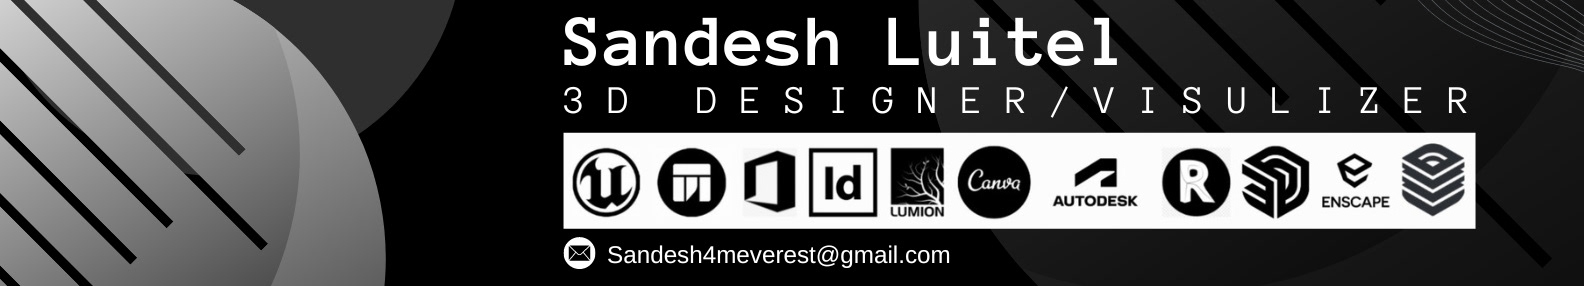 Sandesh Luitel's profile banner